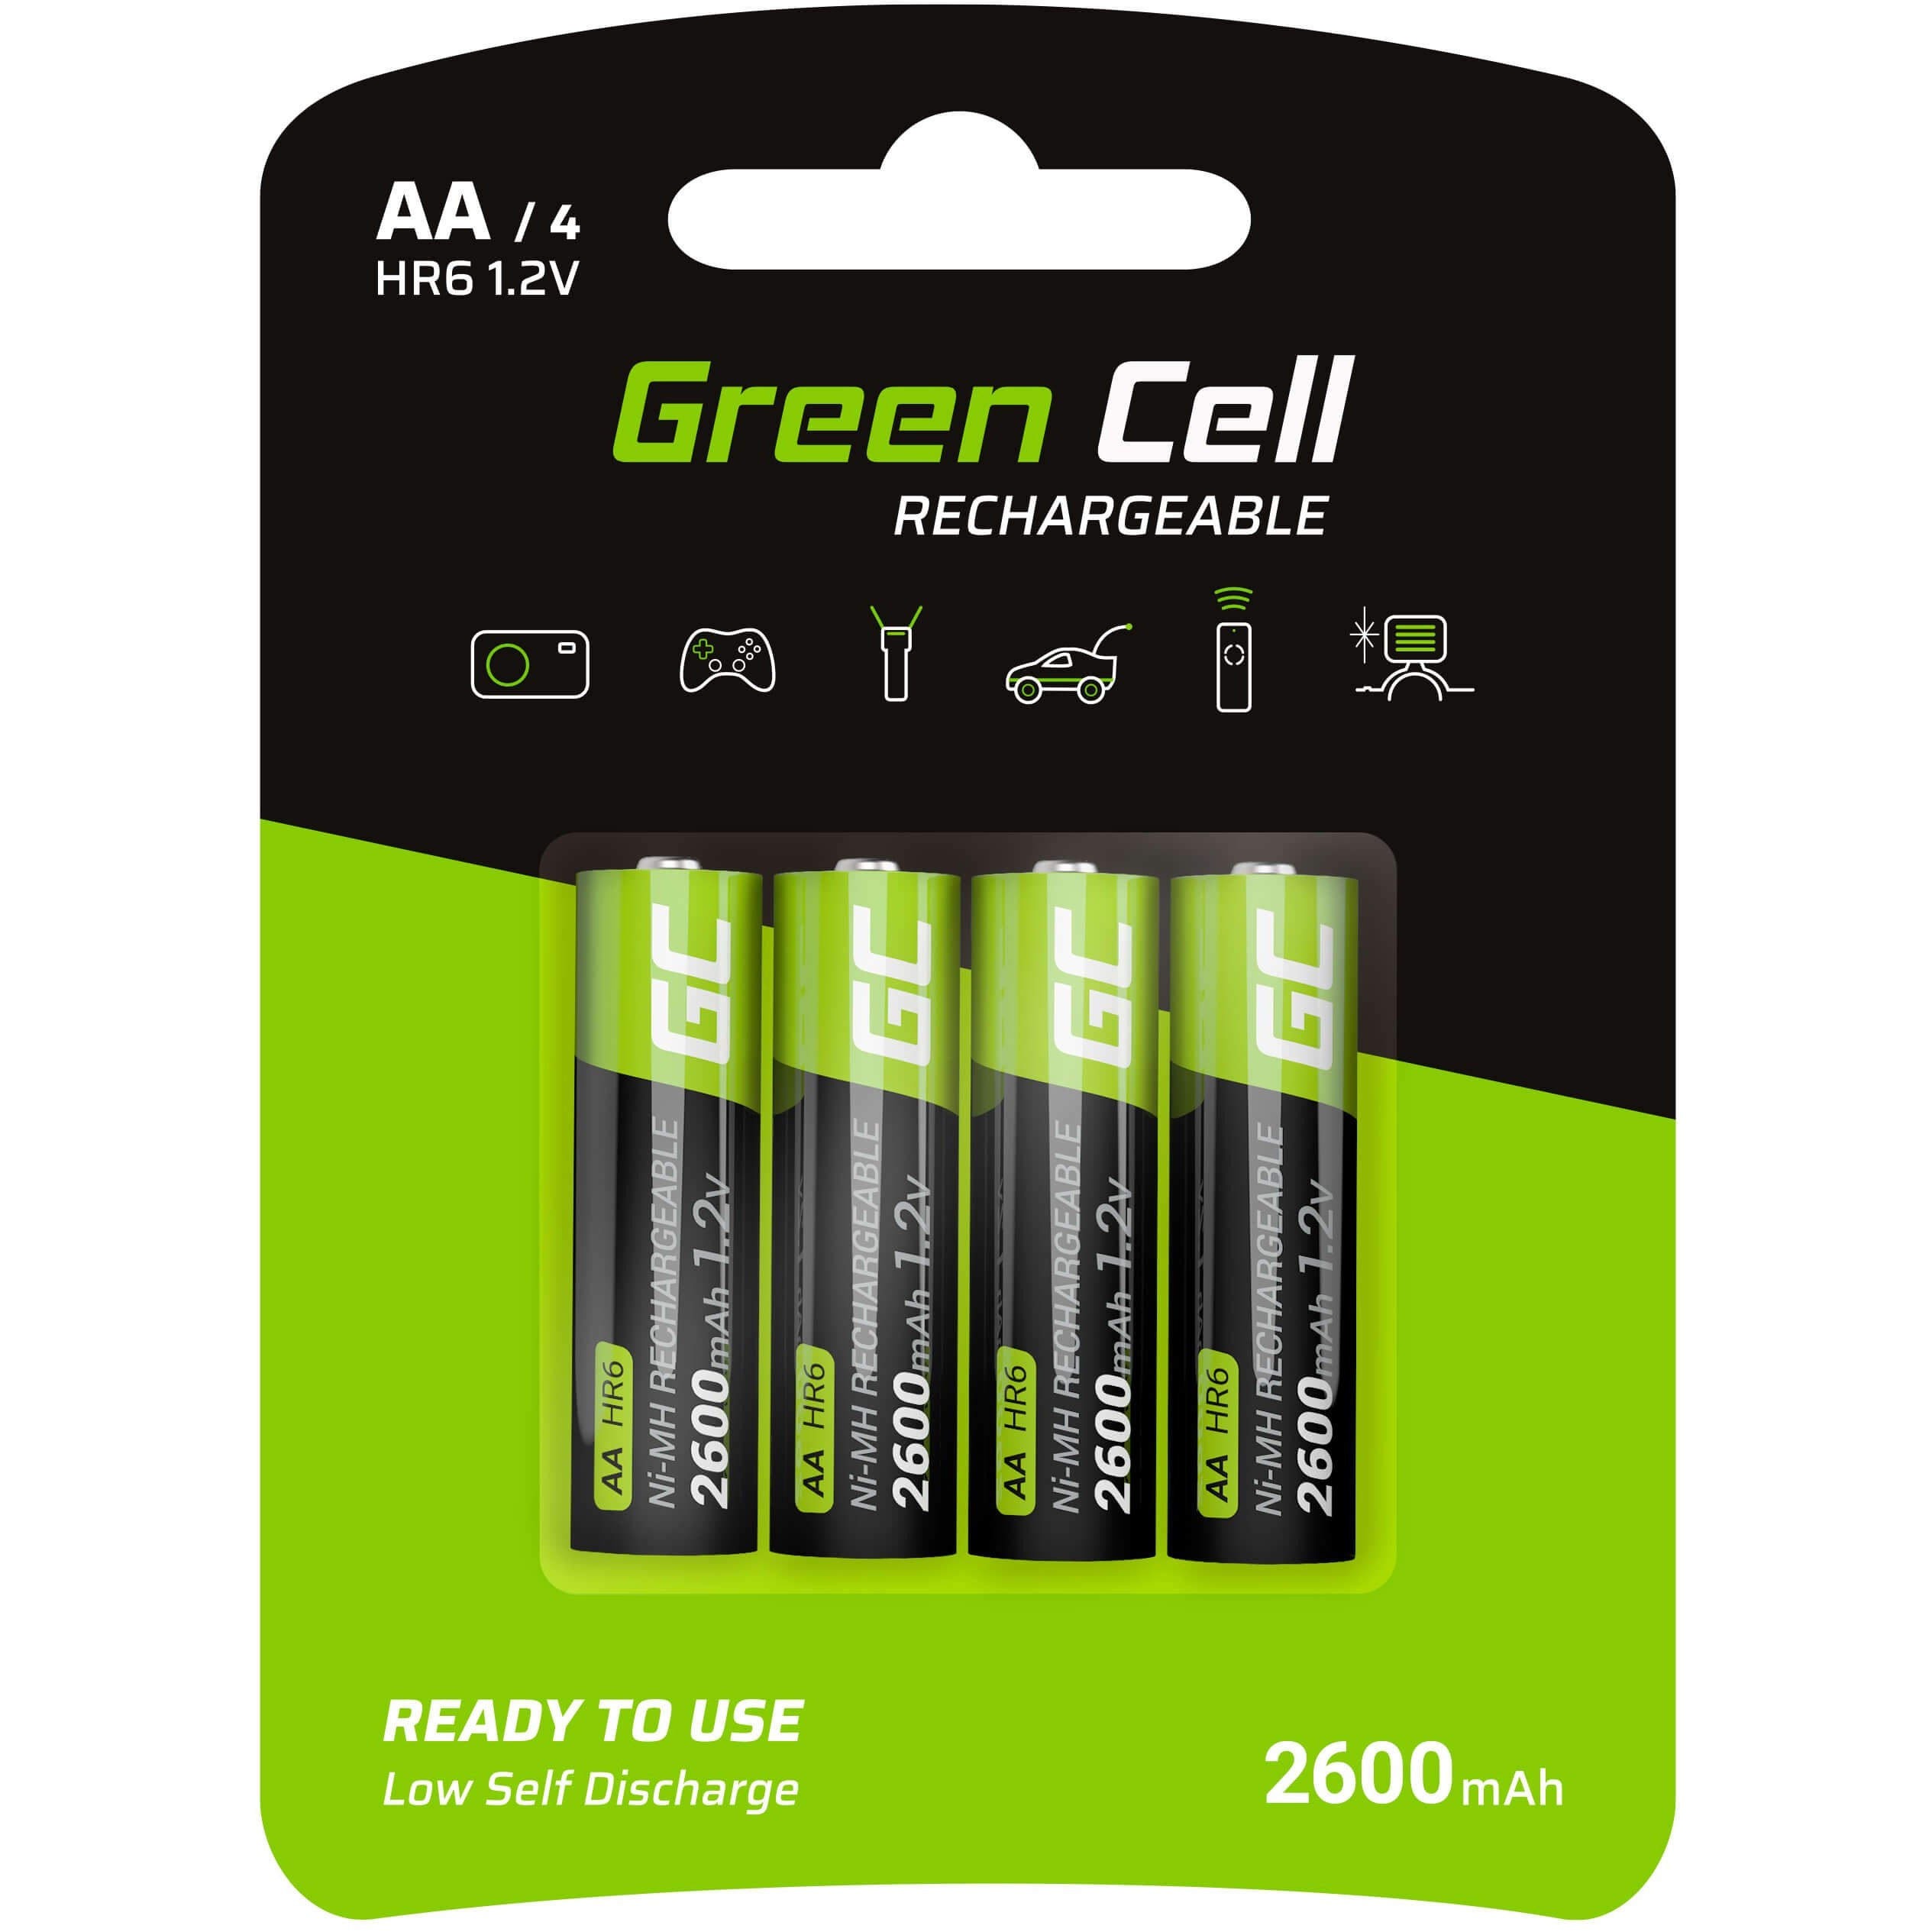 Green Cell GR01, Akkus & Batterien, Green Cell GR01 GR01 (BILD1)